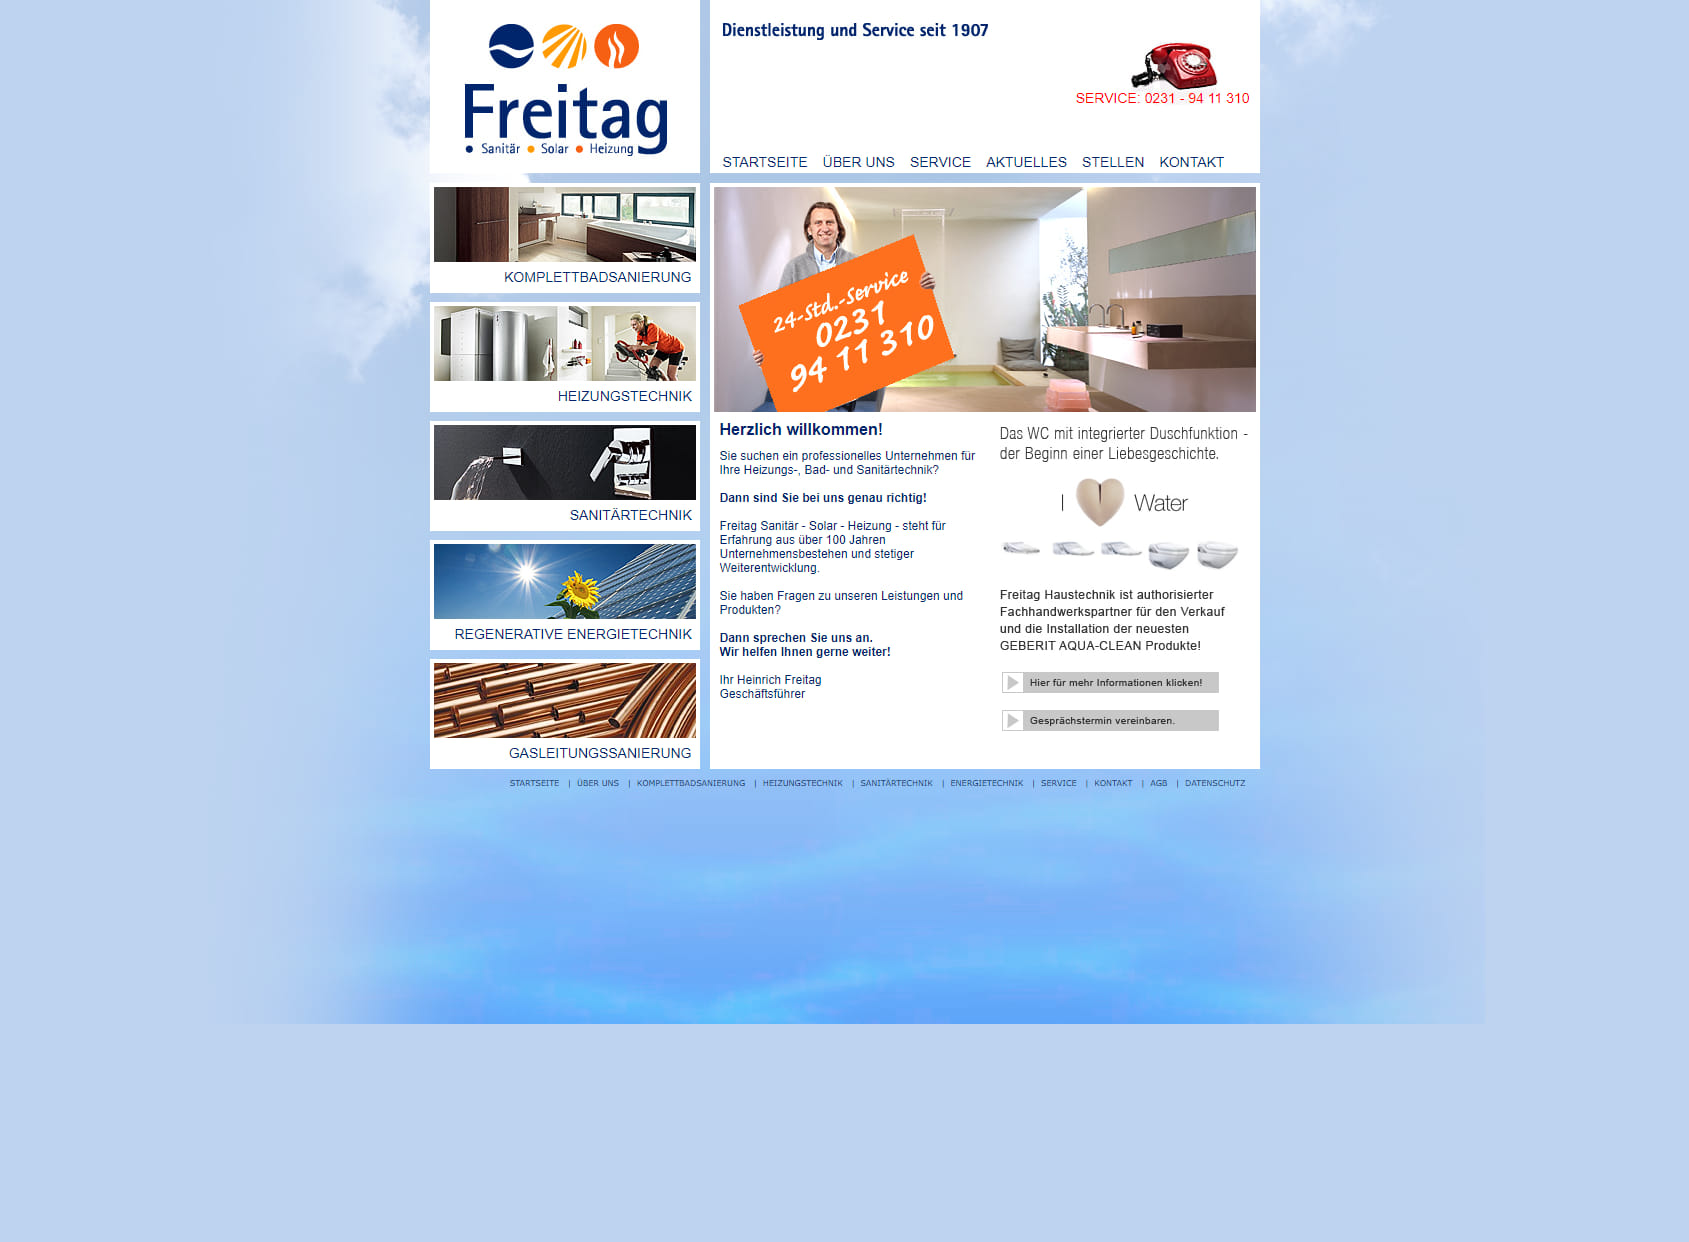 Heinrich Freitag GmbH